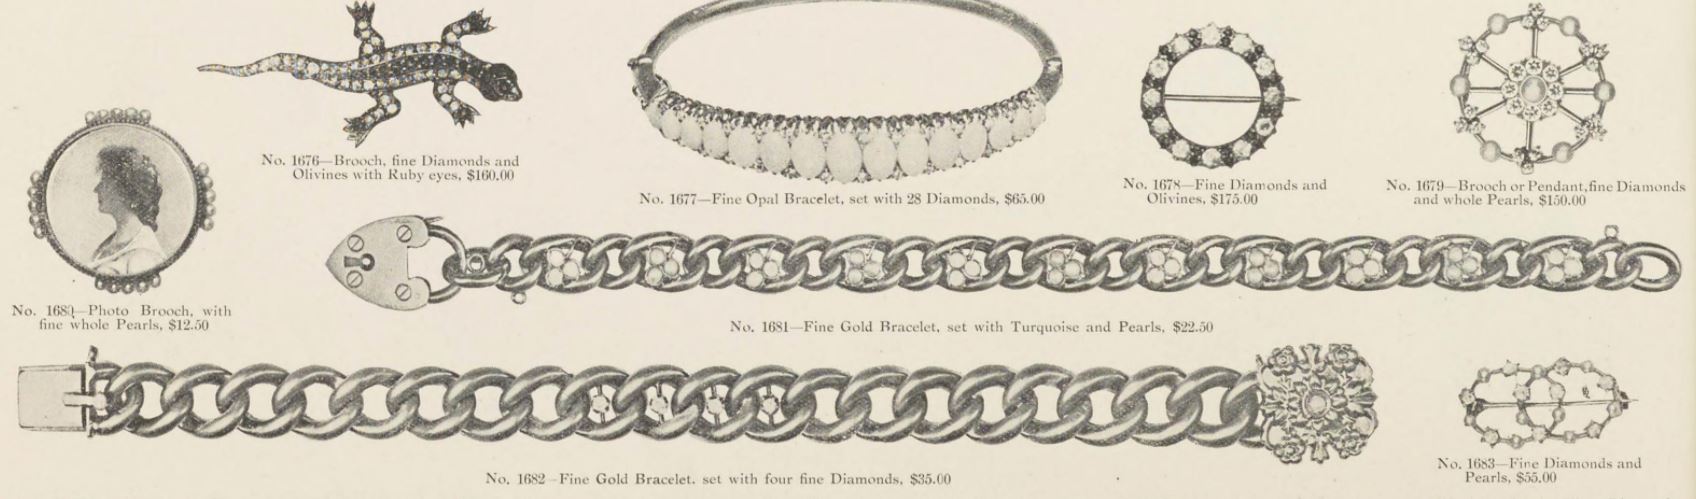 bracelets-1904-kent.JPG